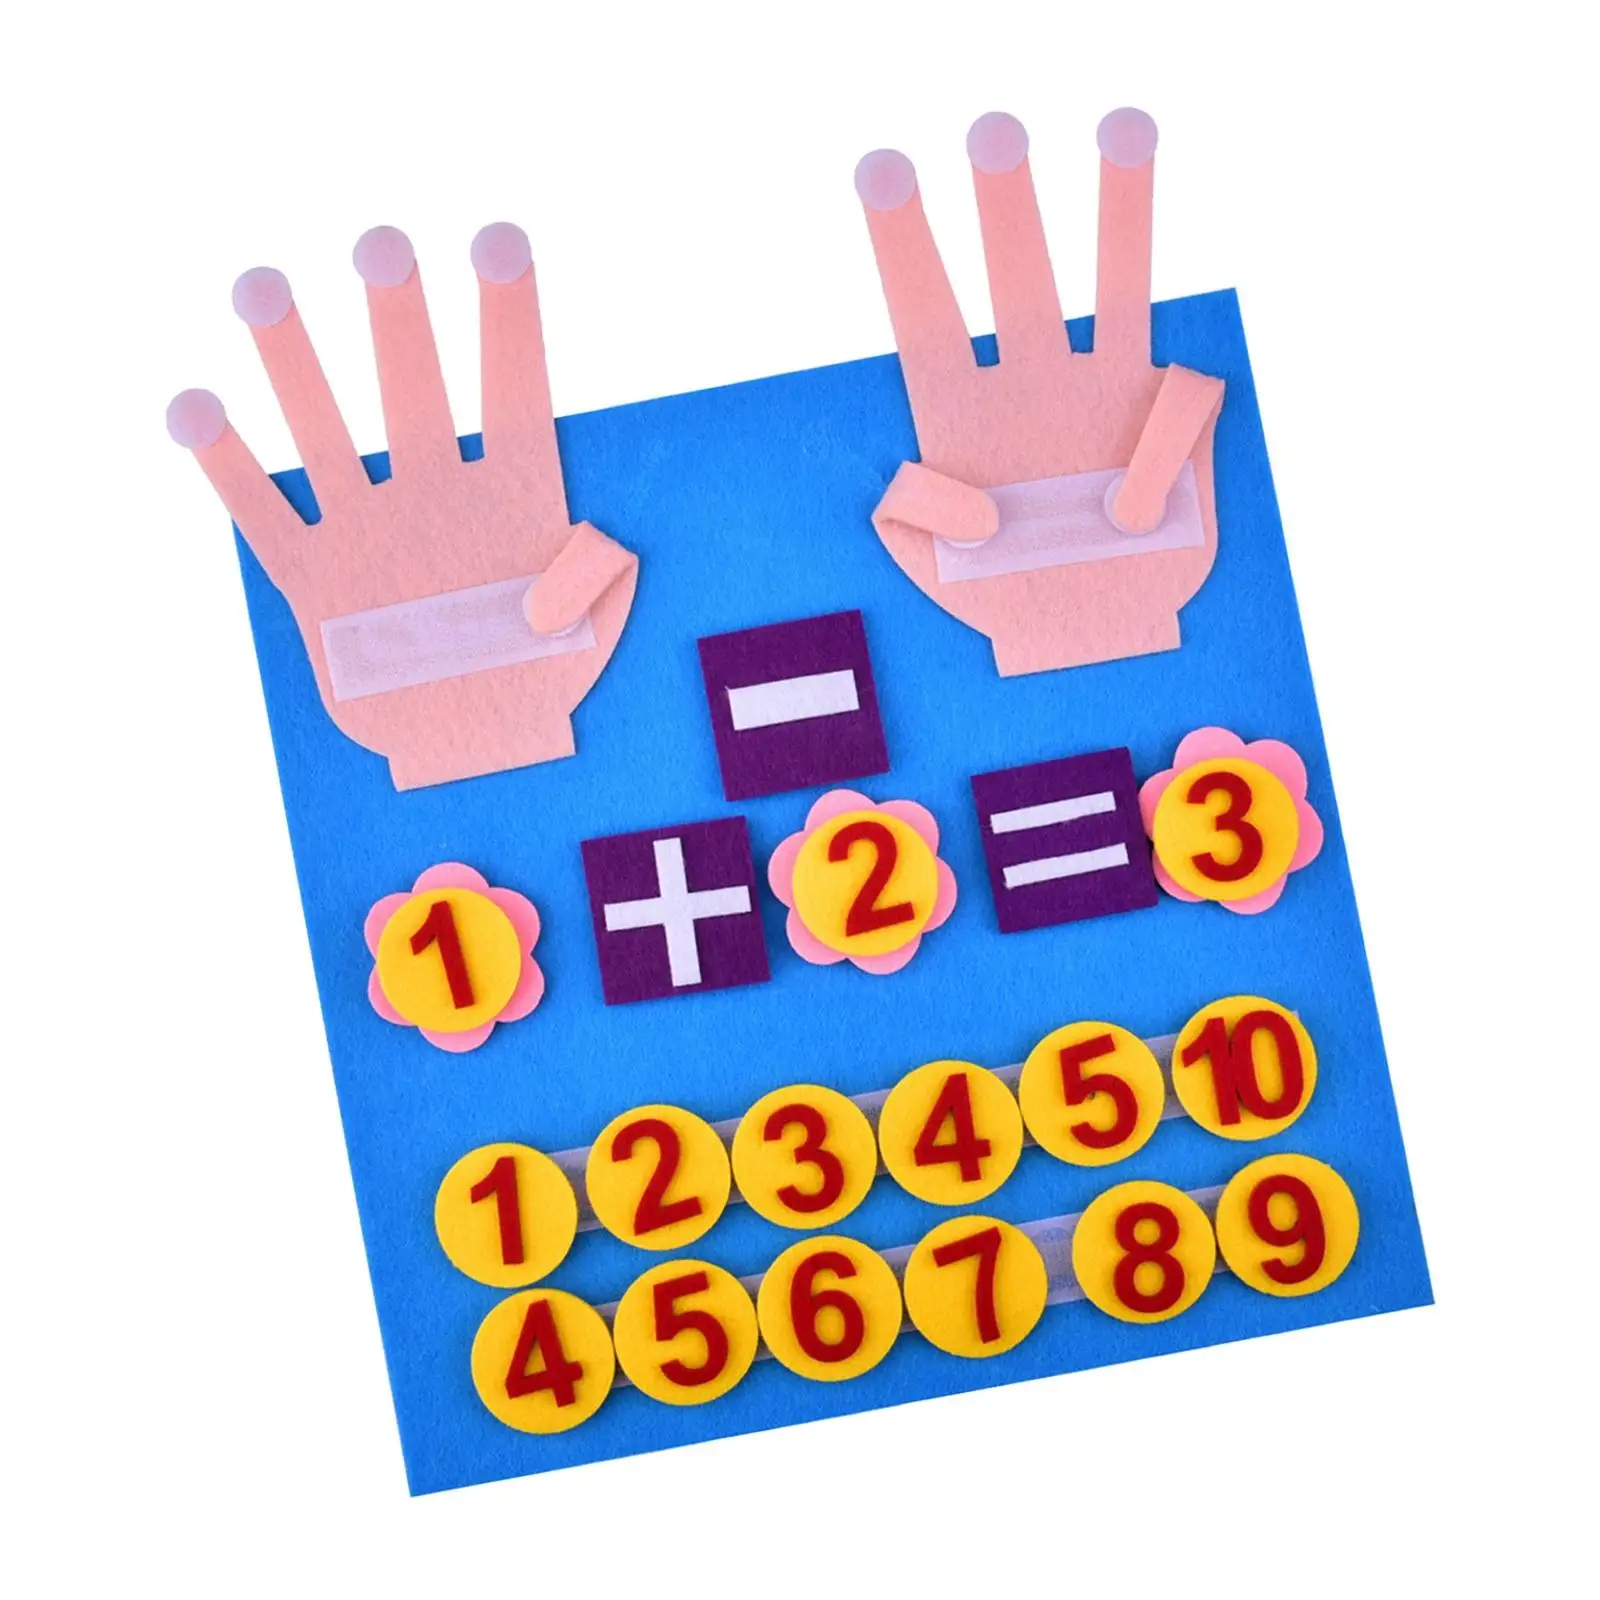 Finger Number Learning Activities Addition Subtraction Felt Math Toys Counting Game for Boys Girls Children Kindergarten Kids